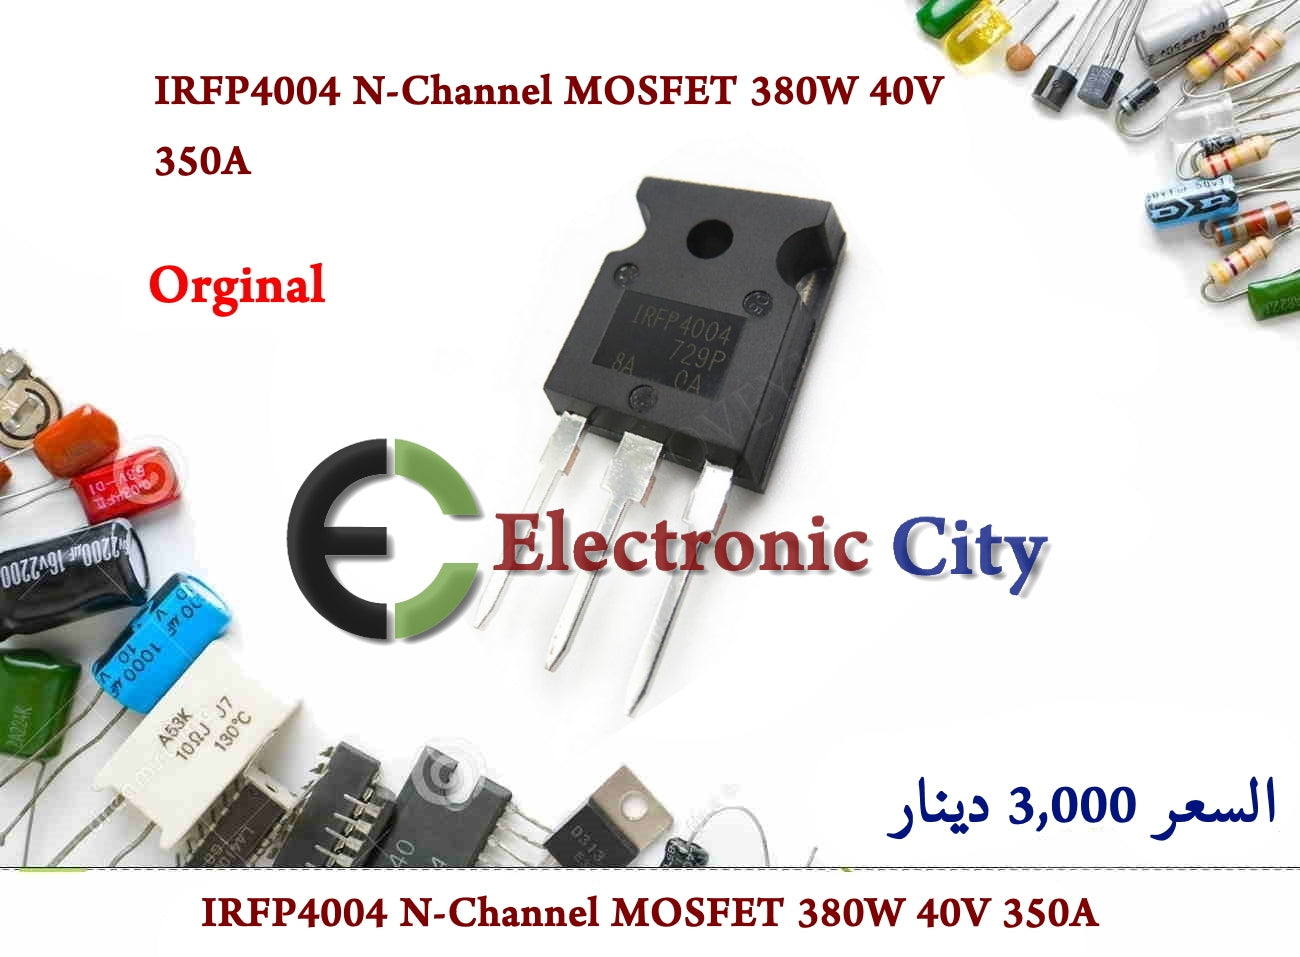 IRFP4004 N-Channel MOSFET 380W 40V 350A